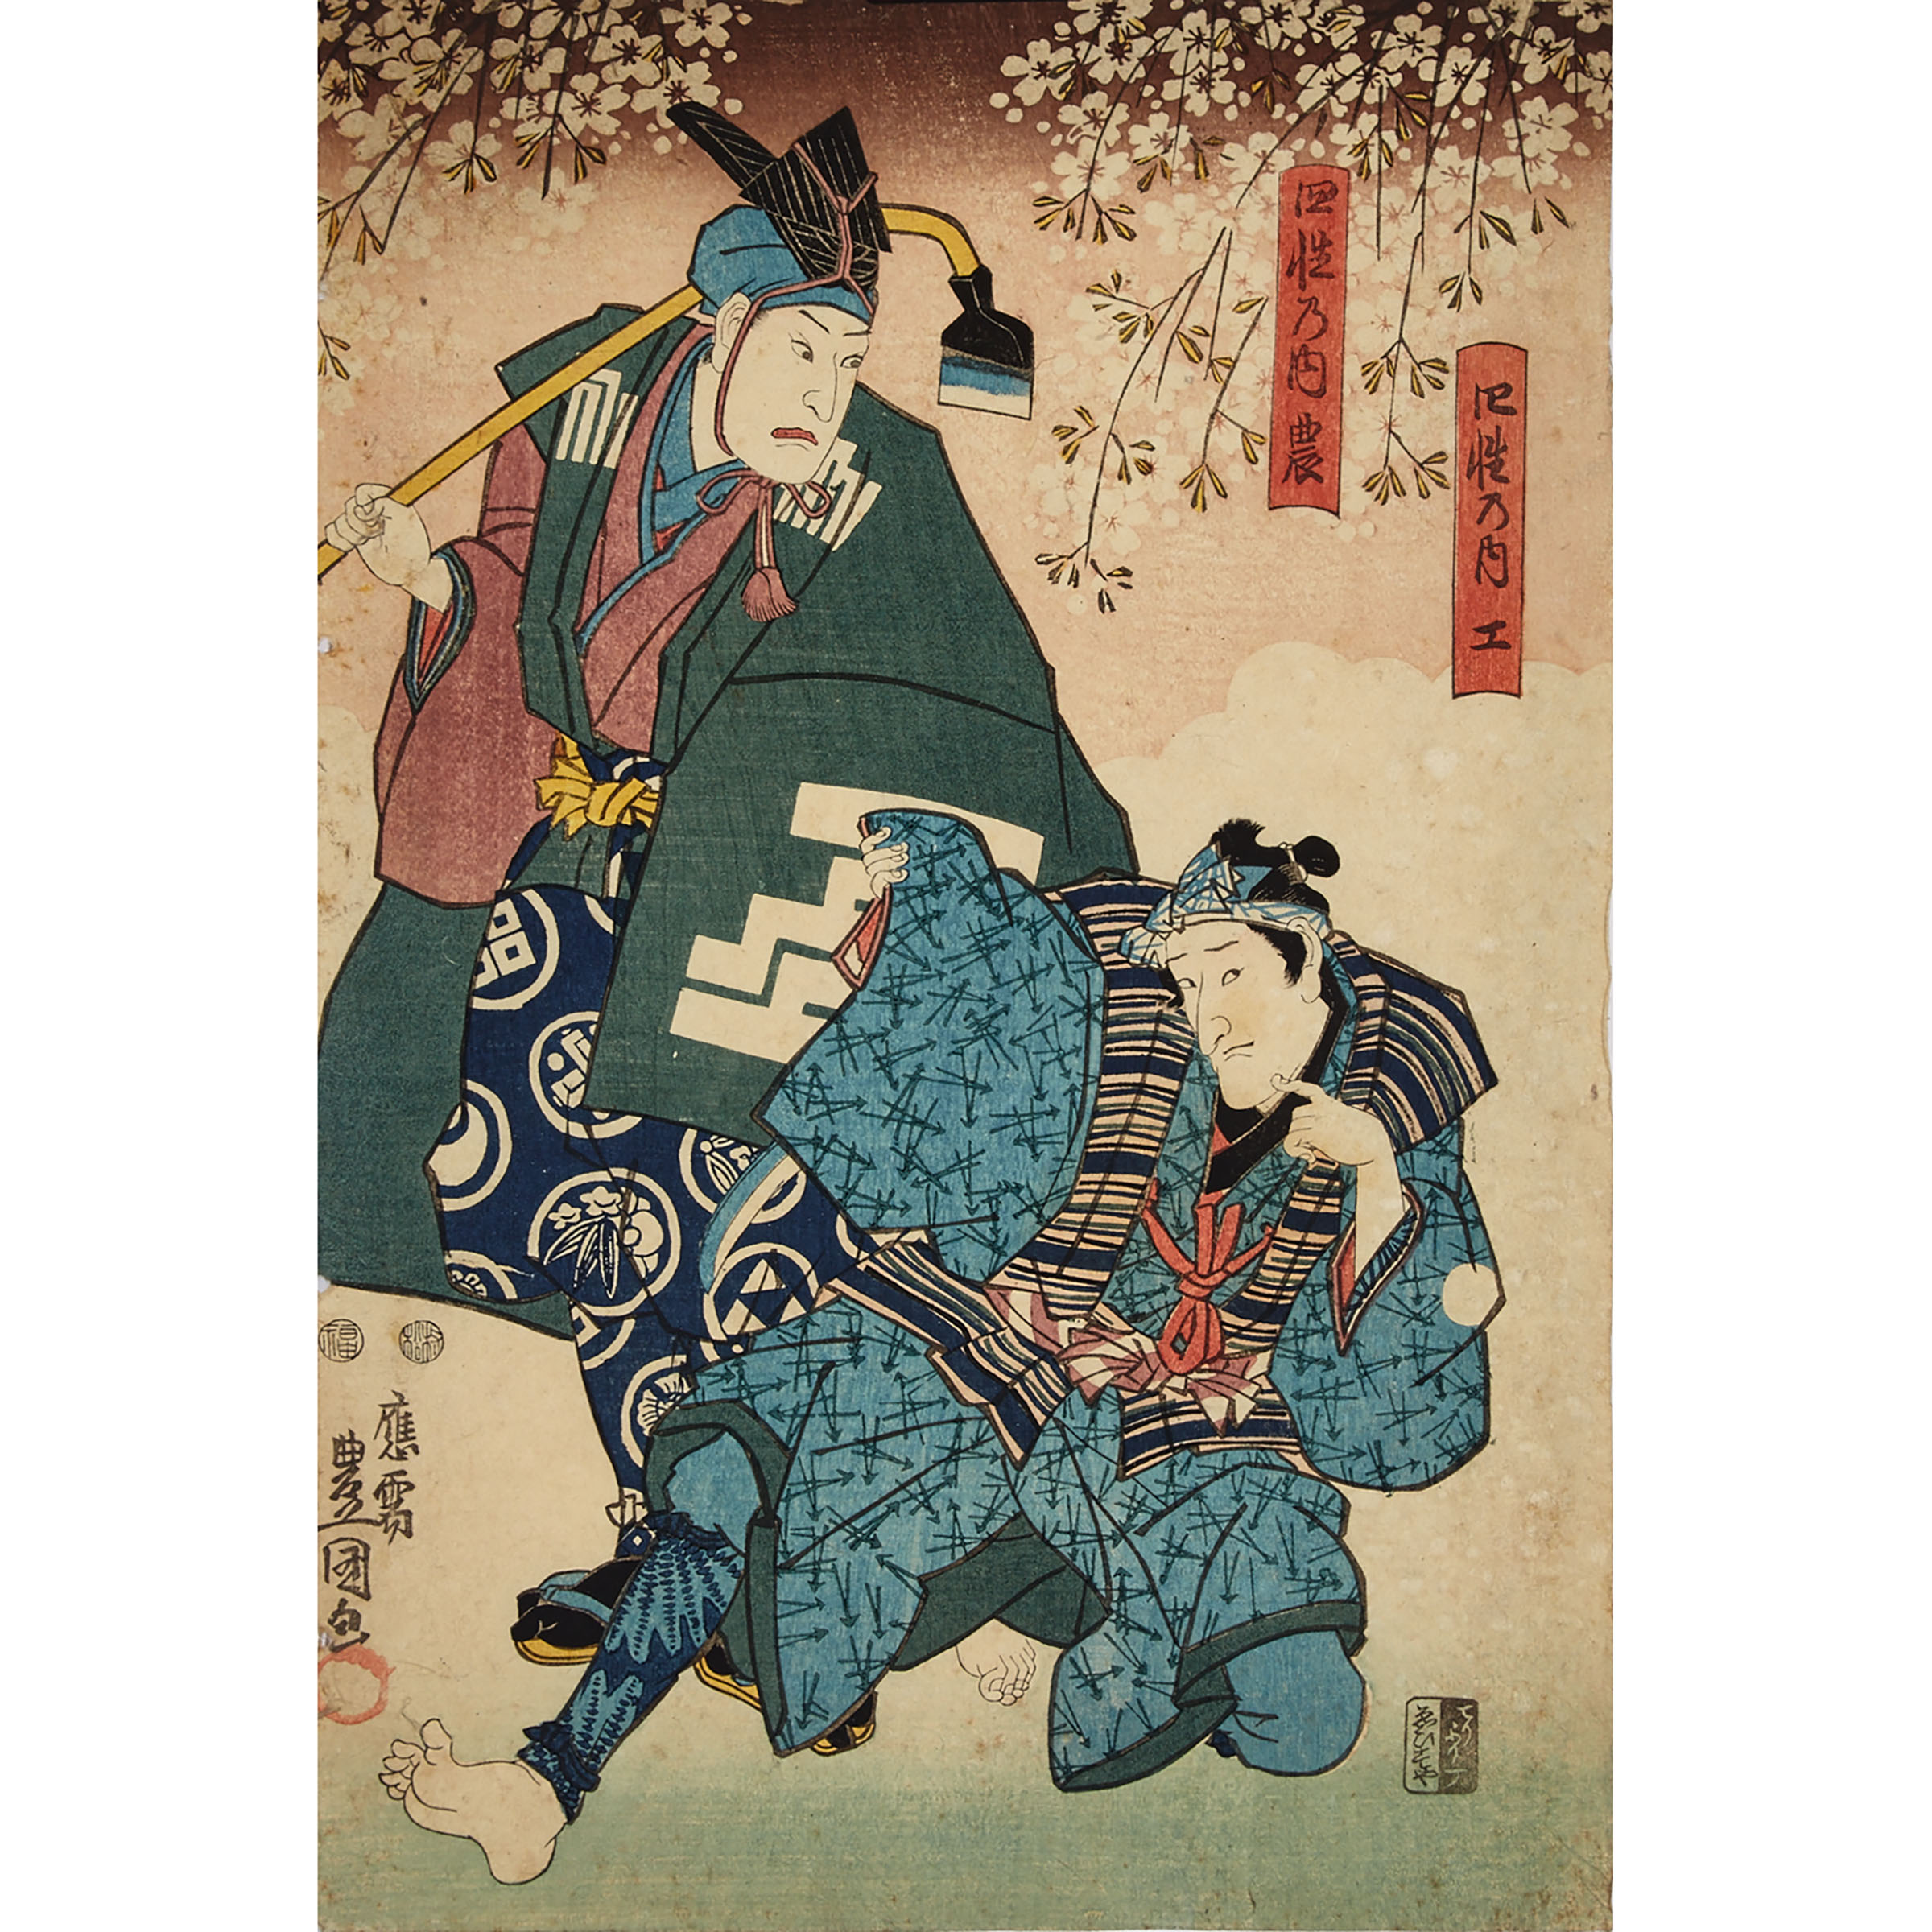 Utagawa Toyokuni III (1786-1865), A Set of Nine Japanese Woodblock Prints